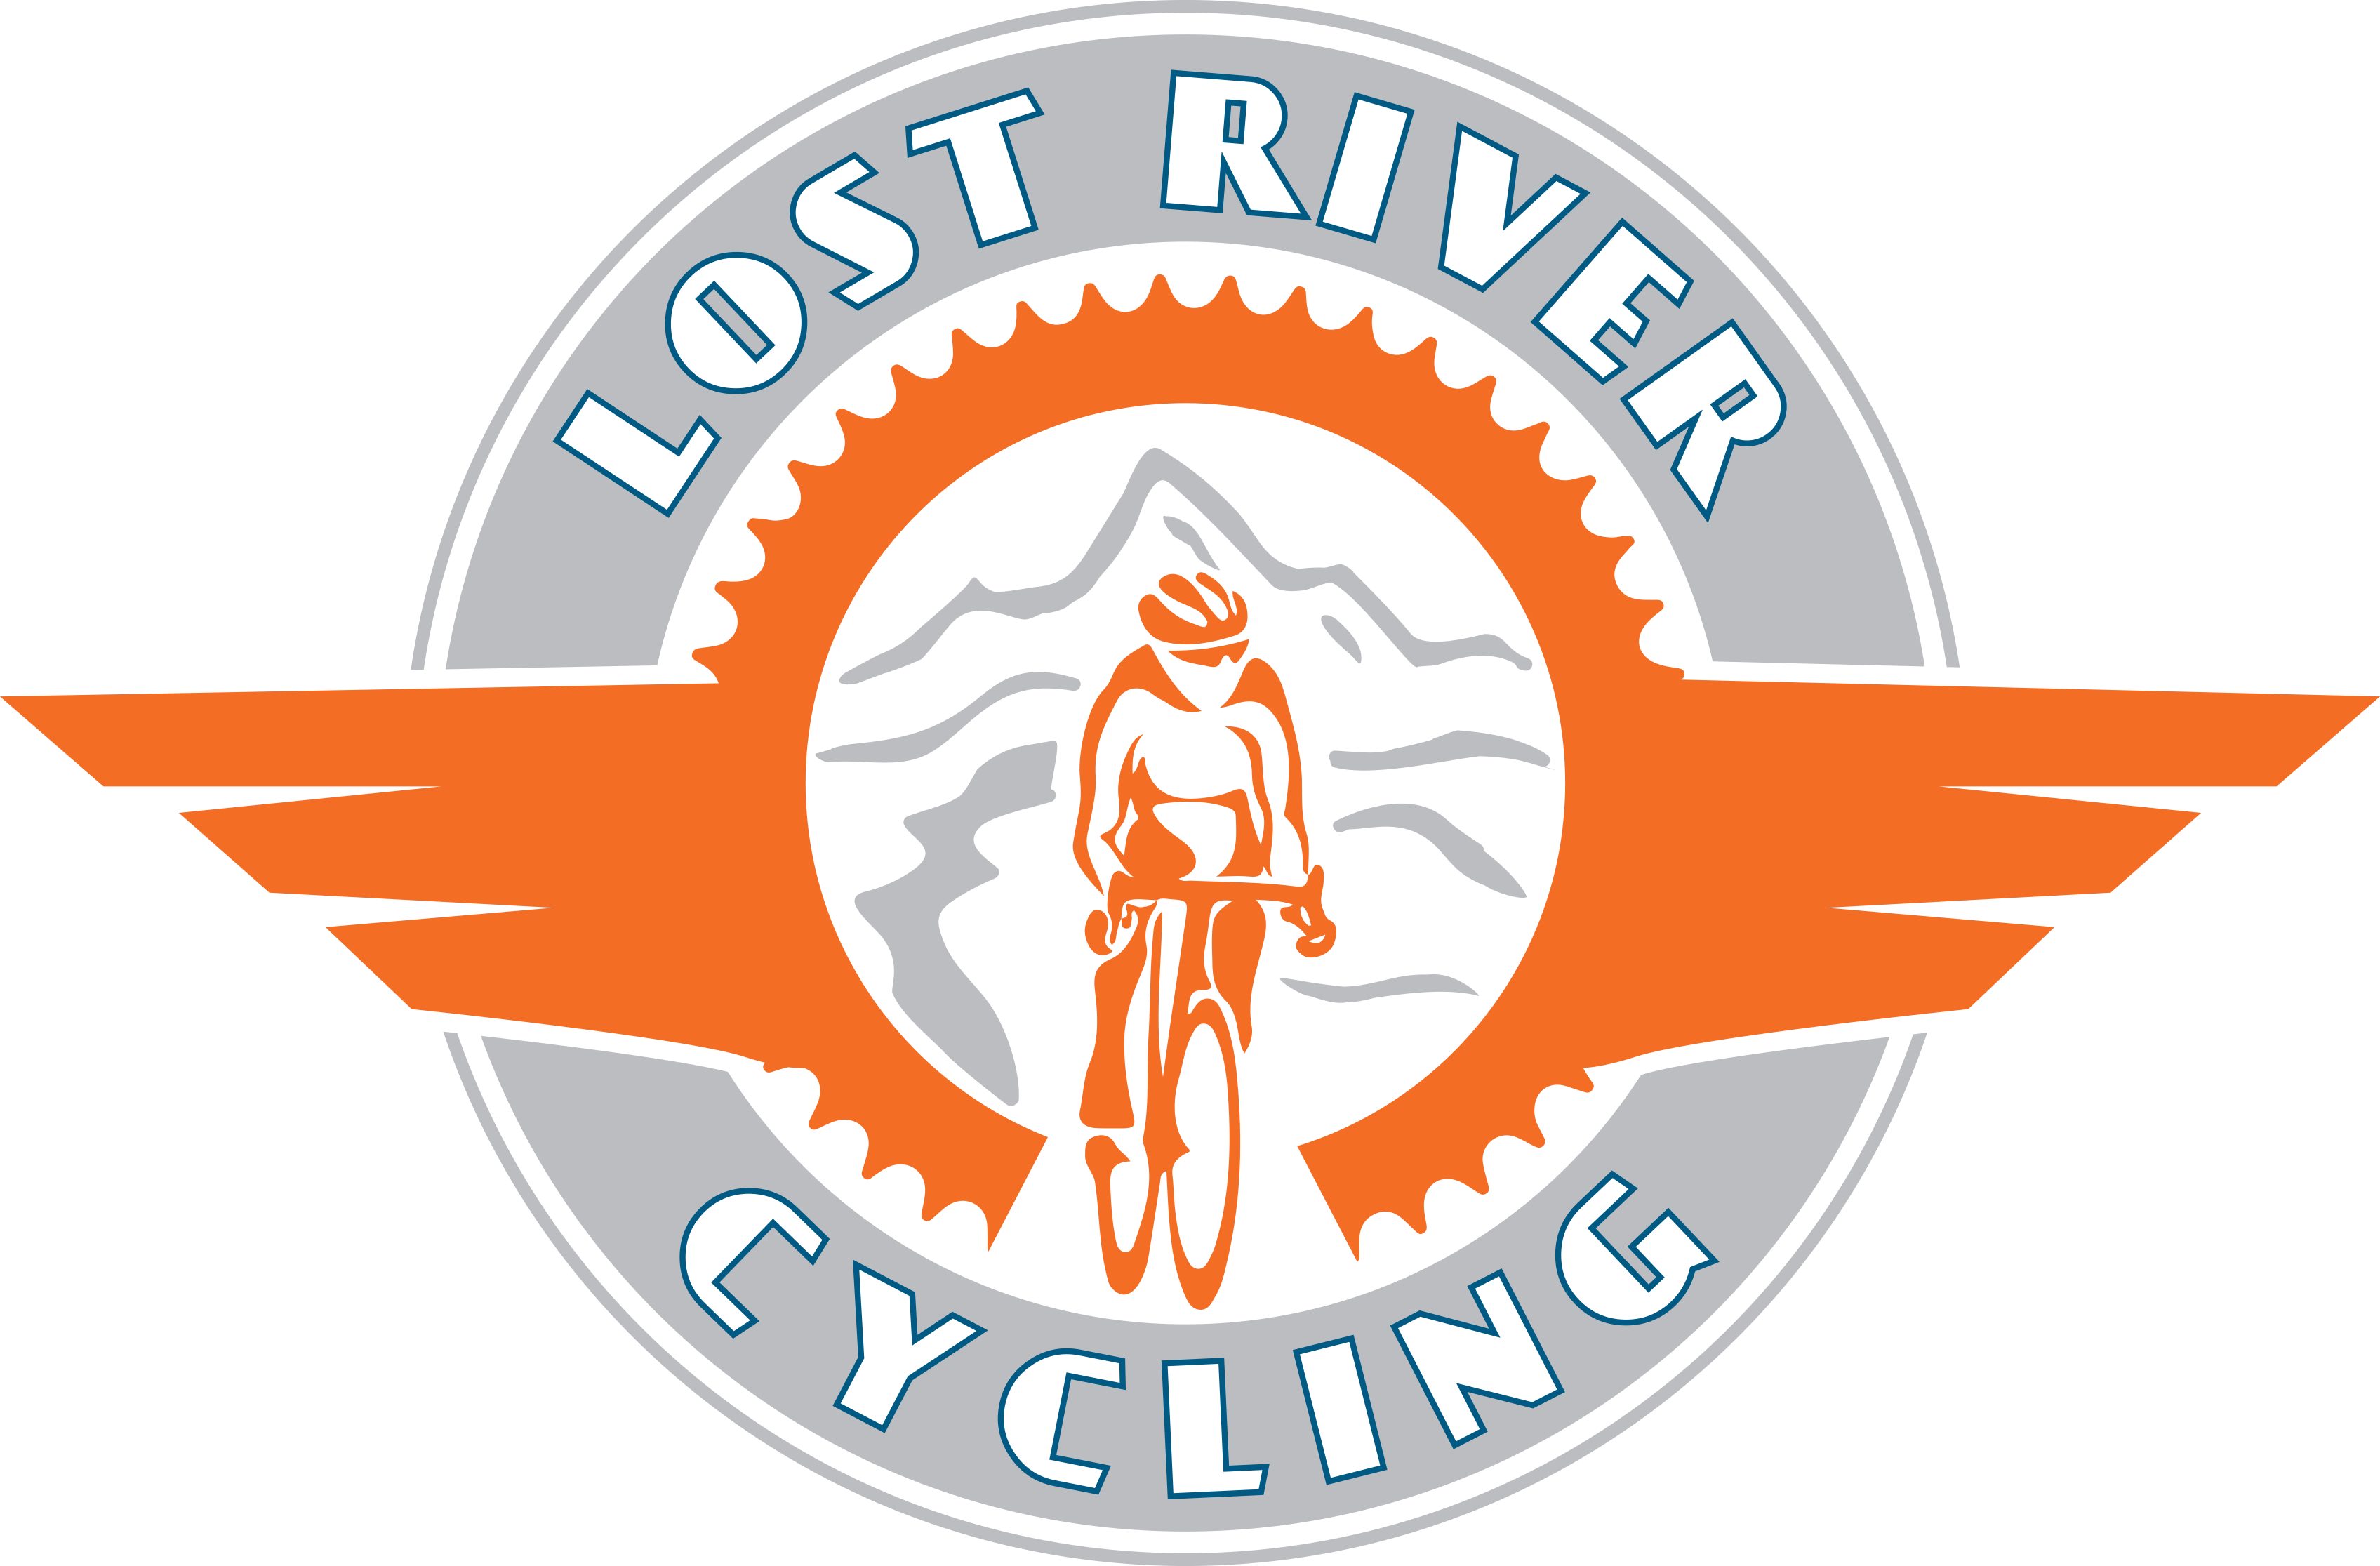 Lost River logo